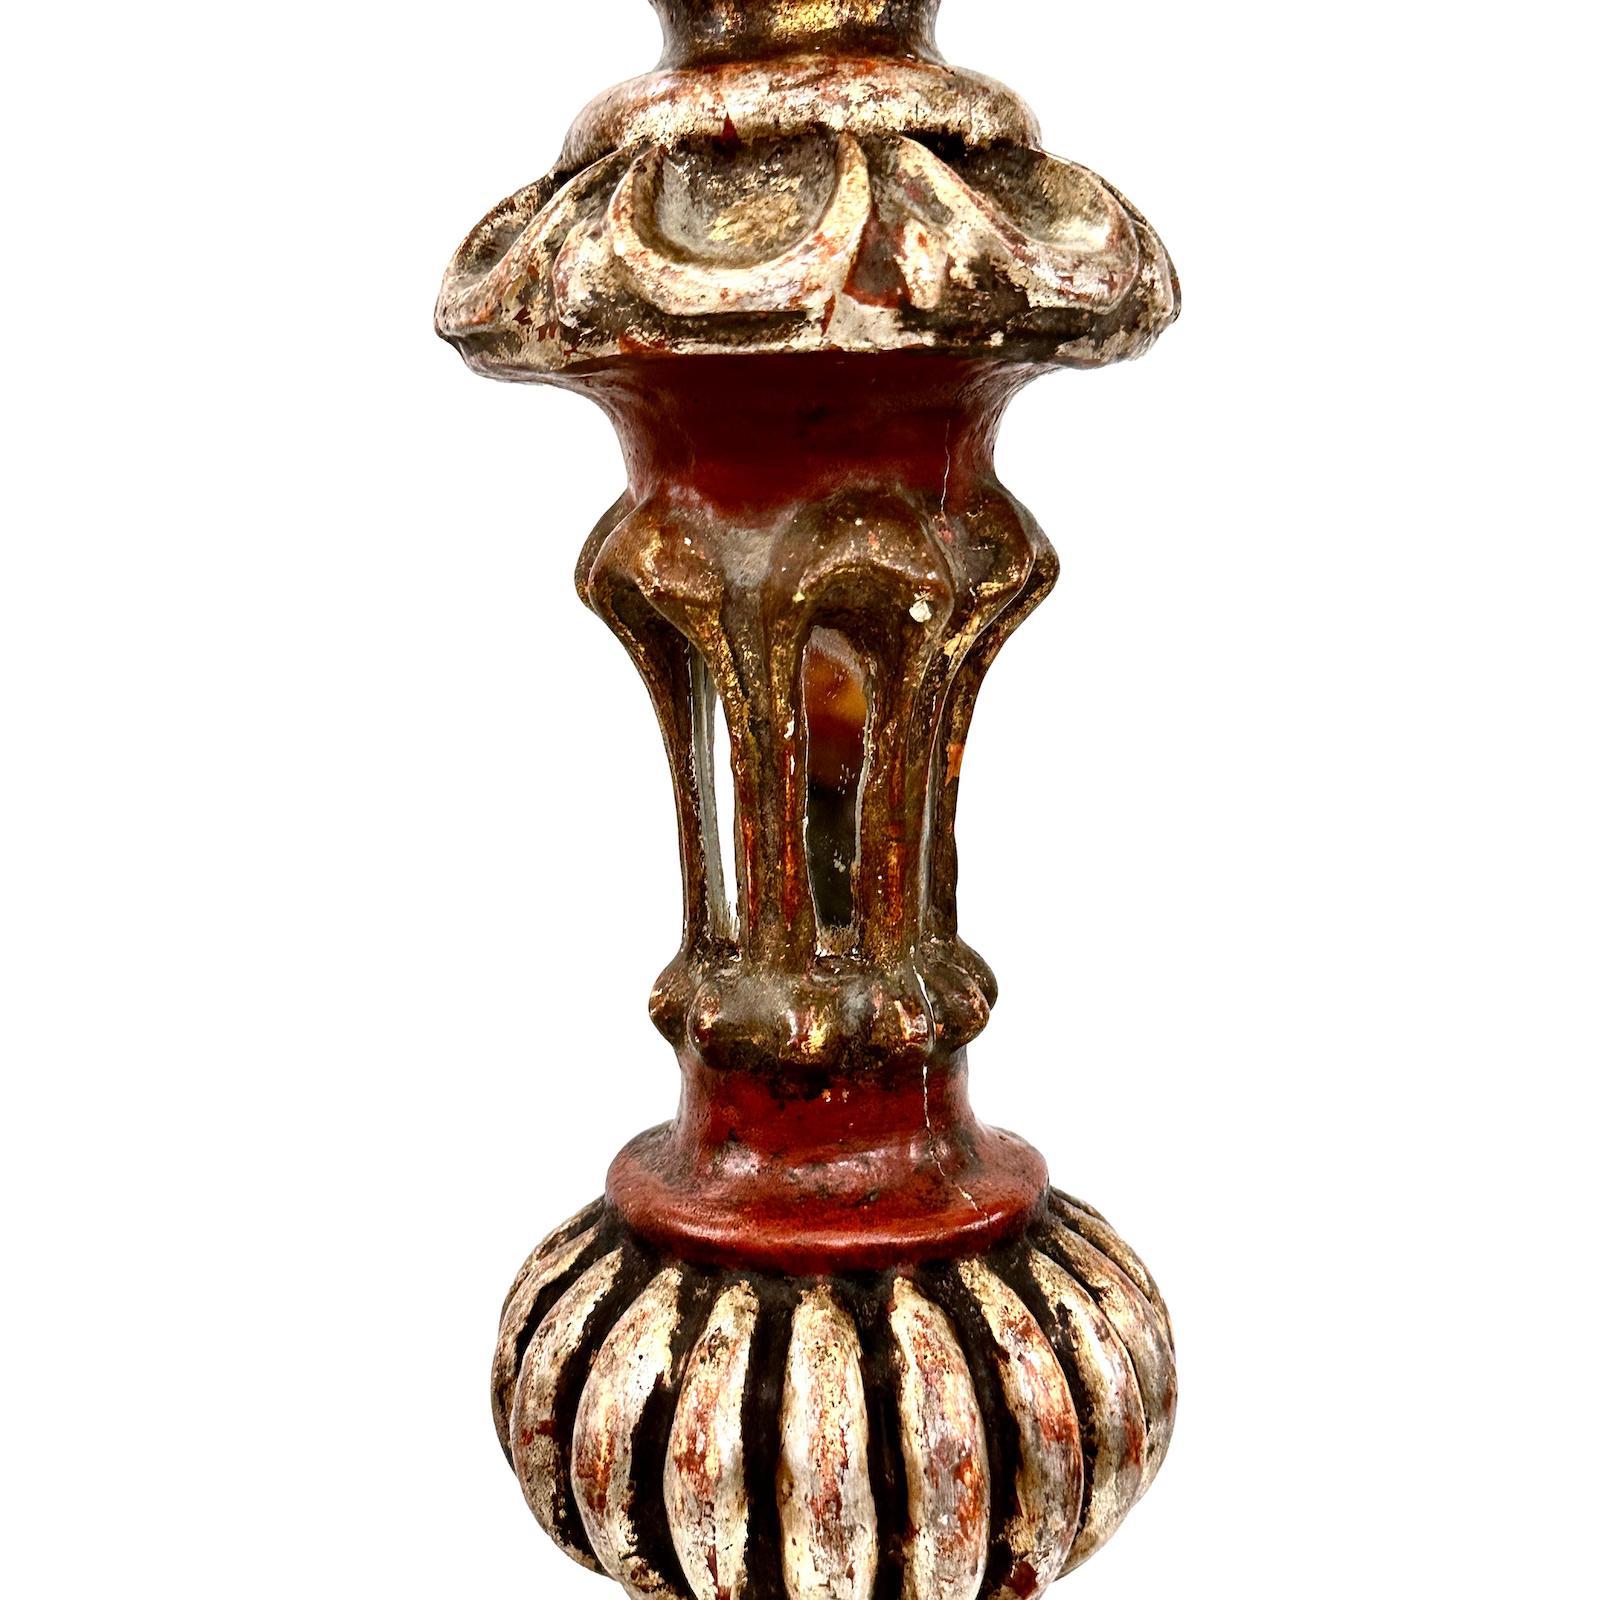 Spanish Antique Candlesitck Lamp For Sale